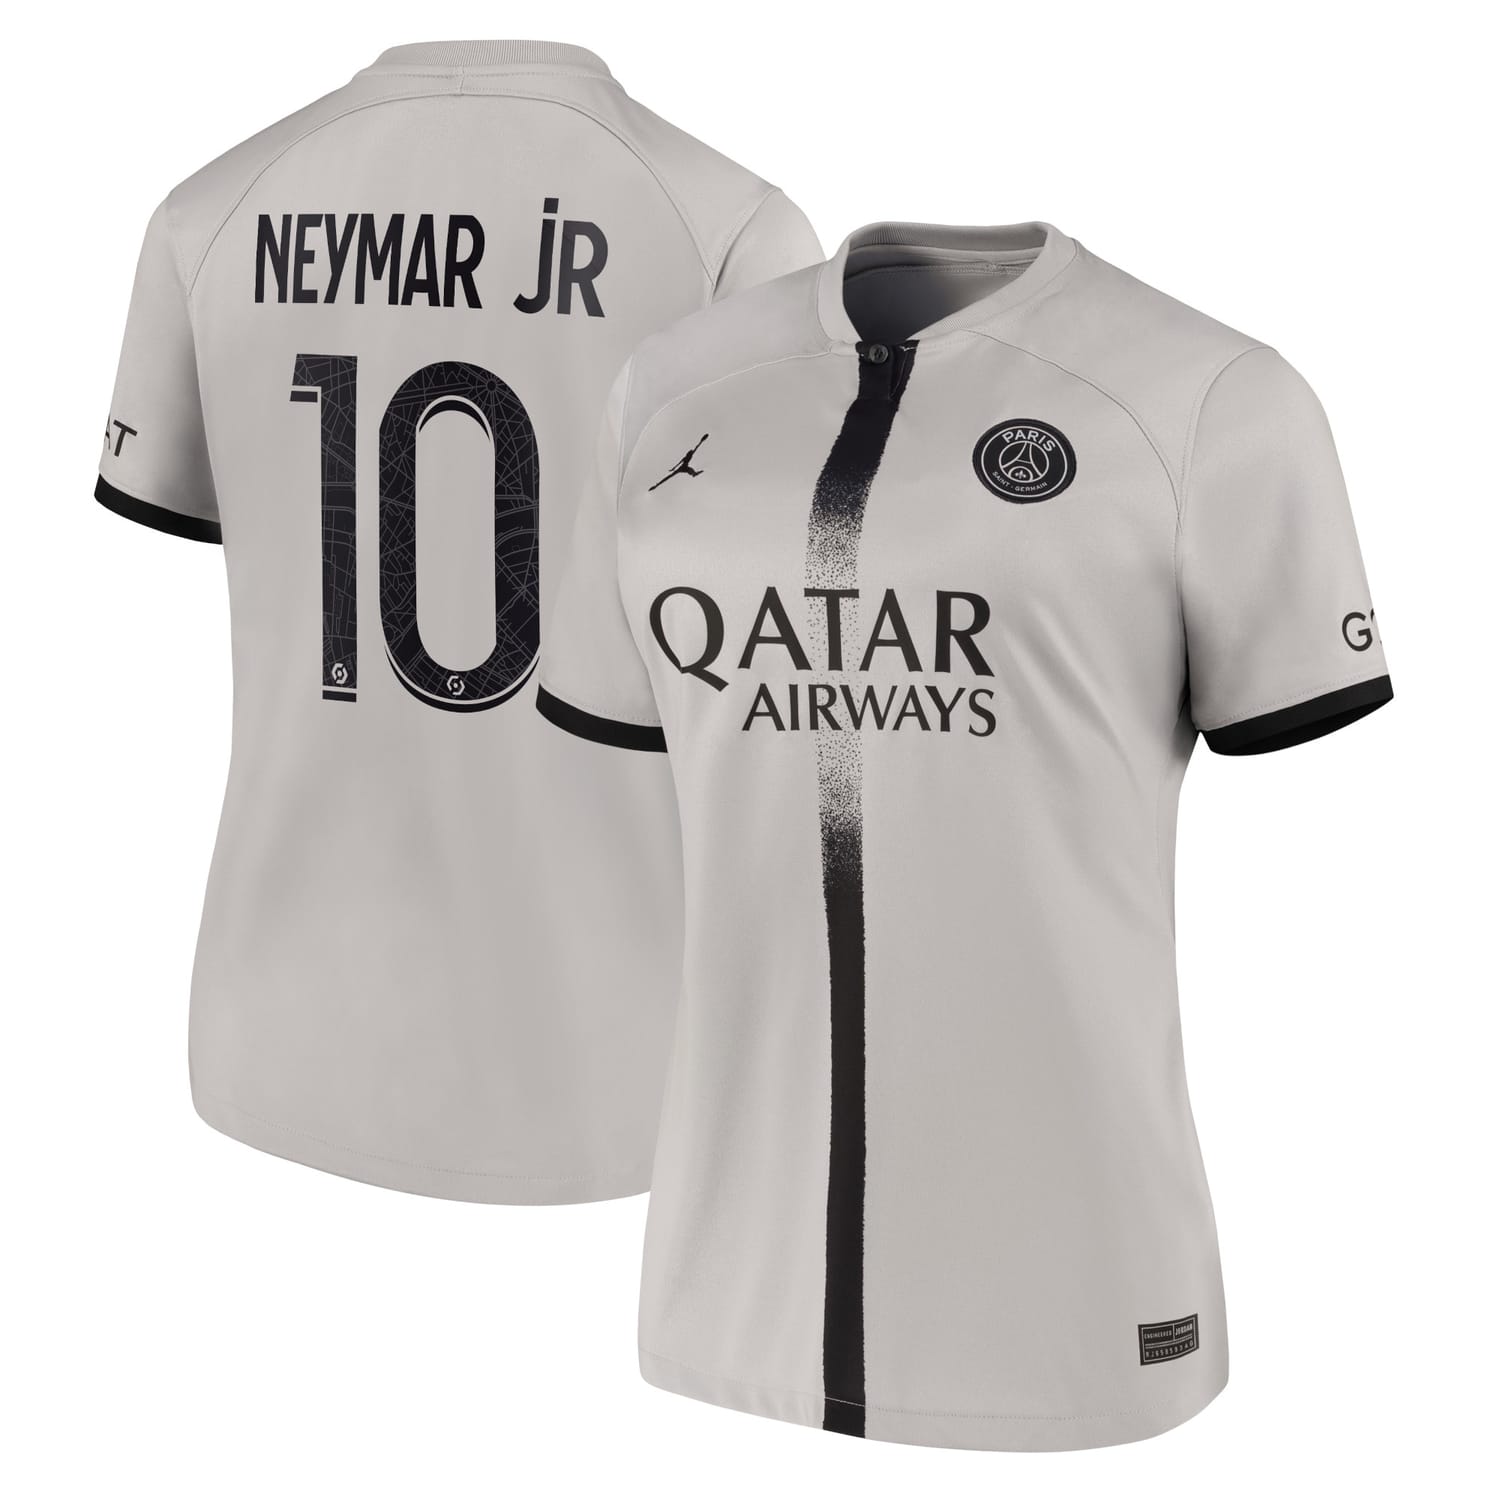 Ligue 1 Paris Saint-Germain Away Jersey Shirt Black 2022-23 player Neymar Jr. printing for Women